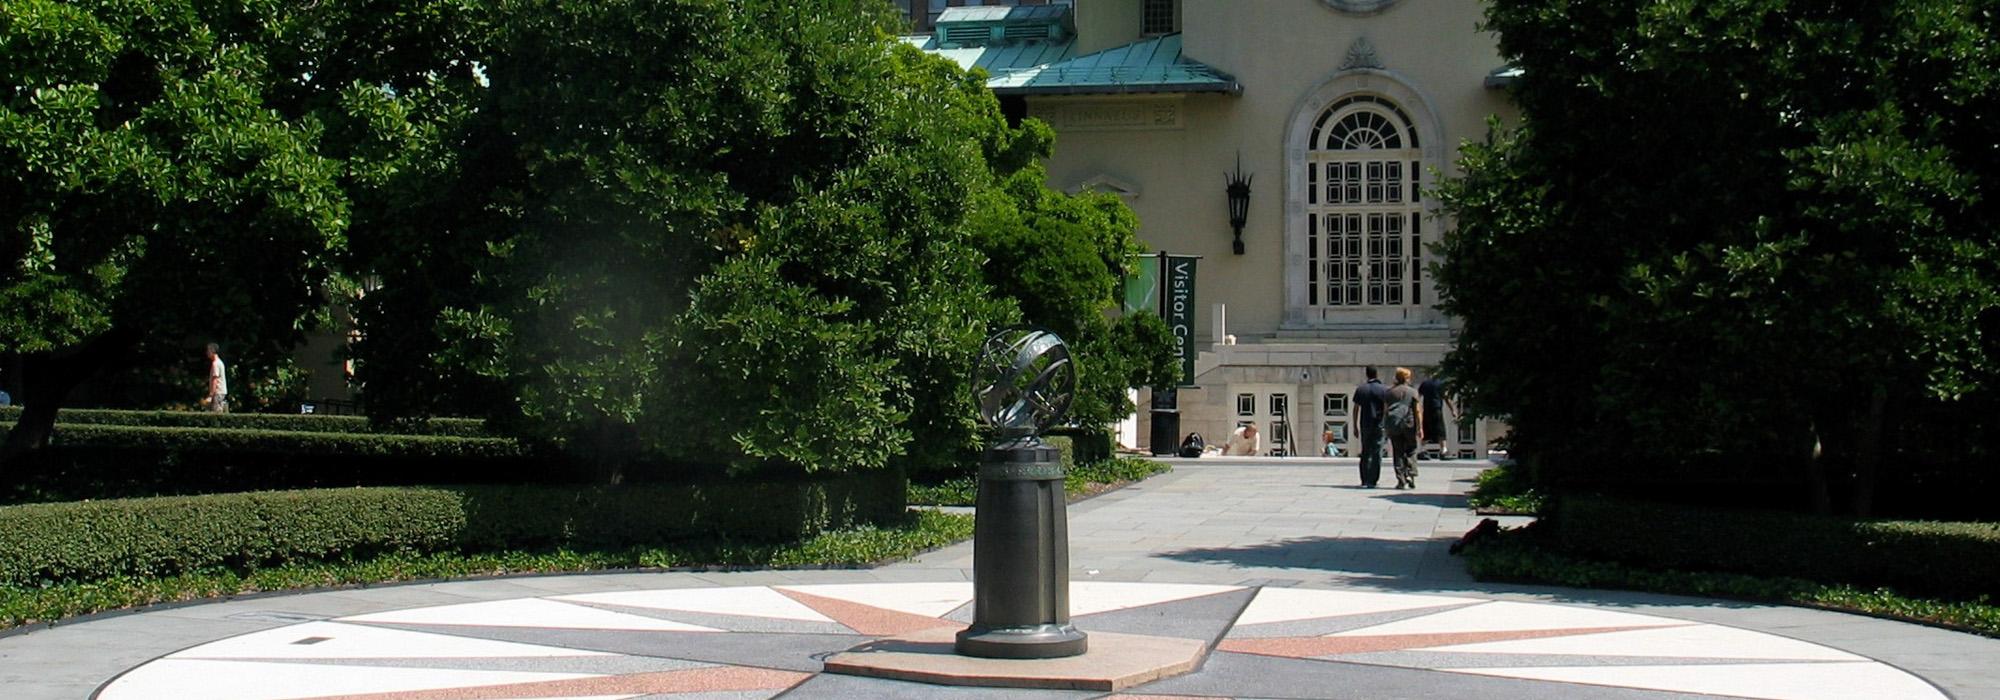 Magnolia Plaza at the Brooklyn Botanic Garden